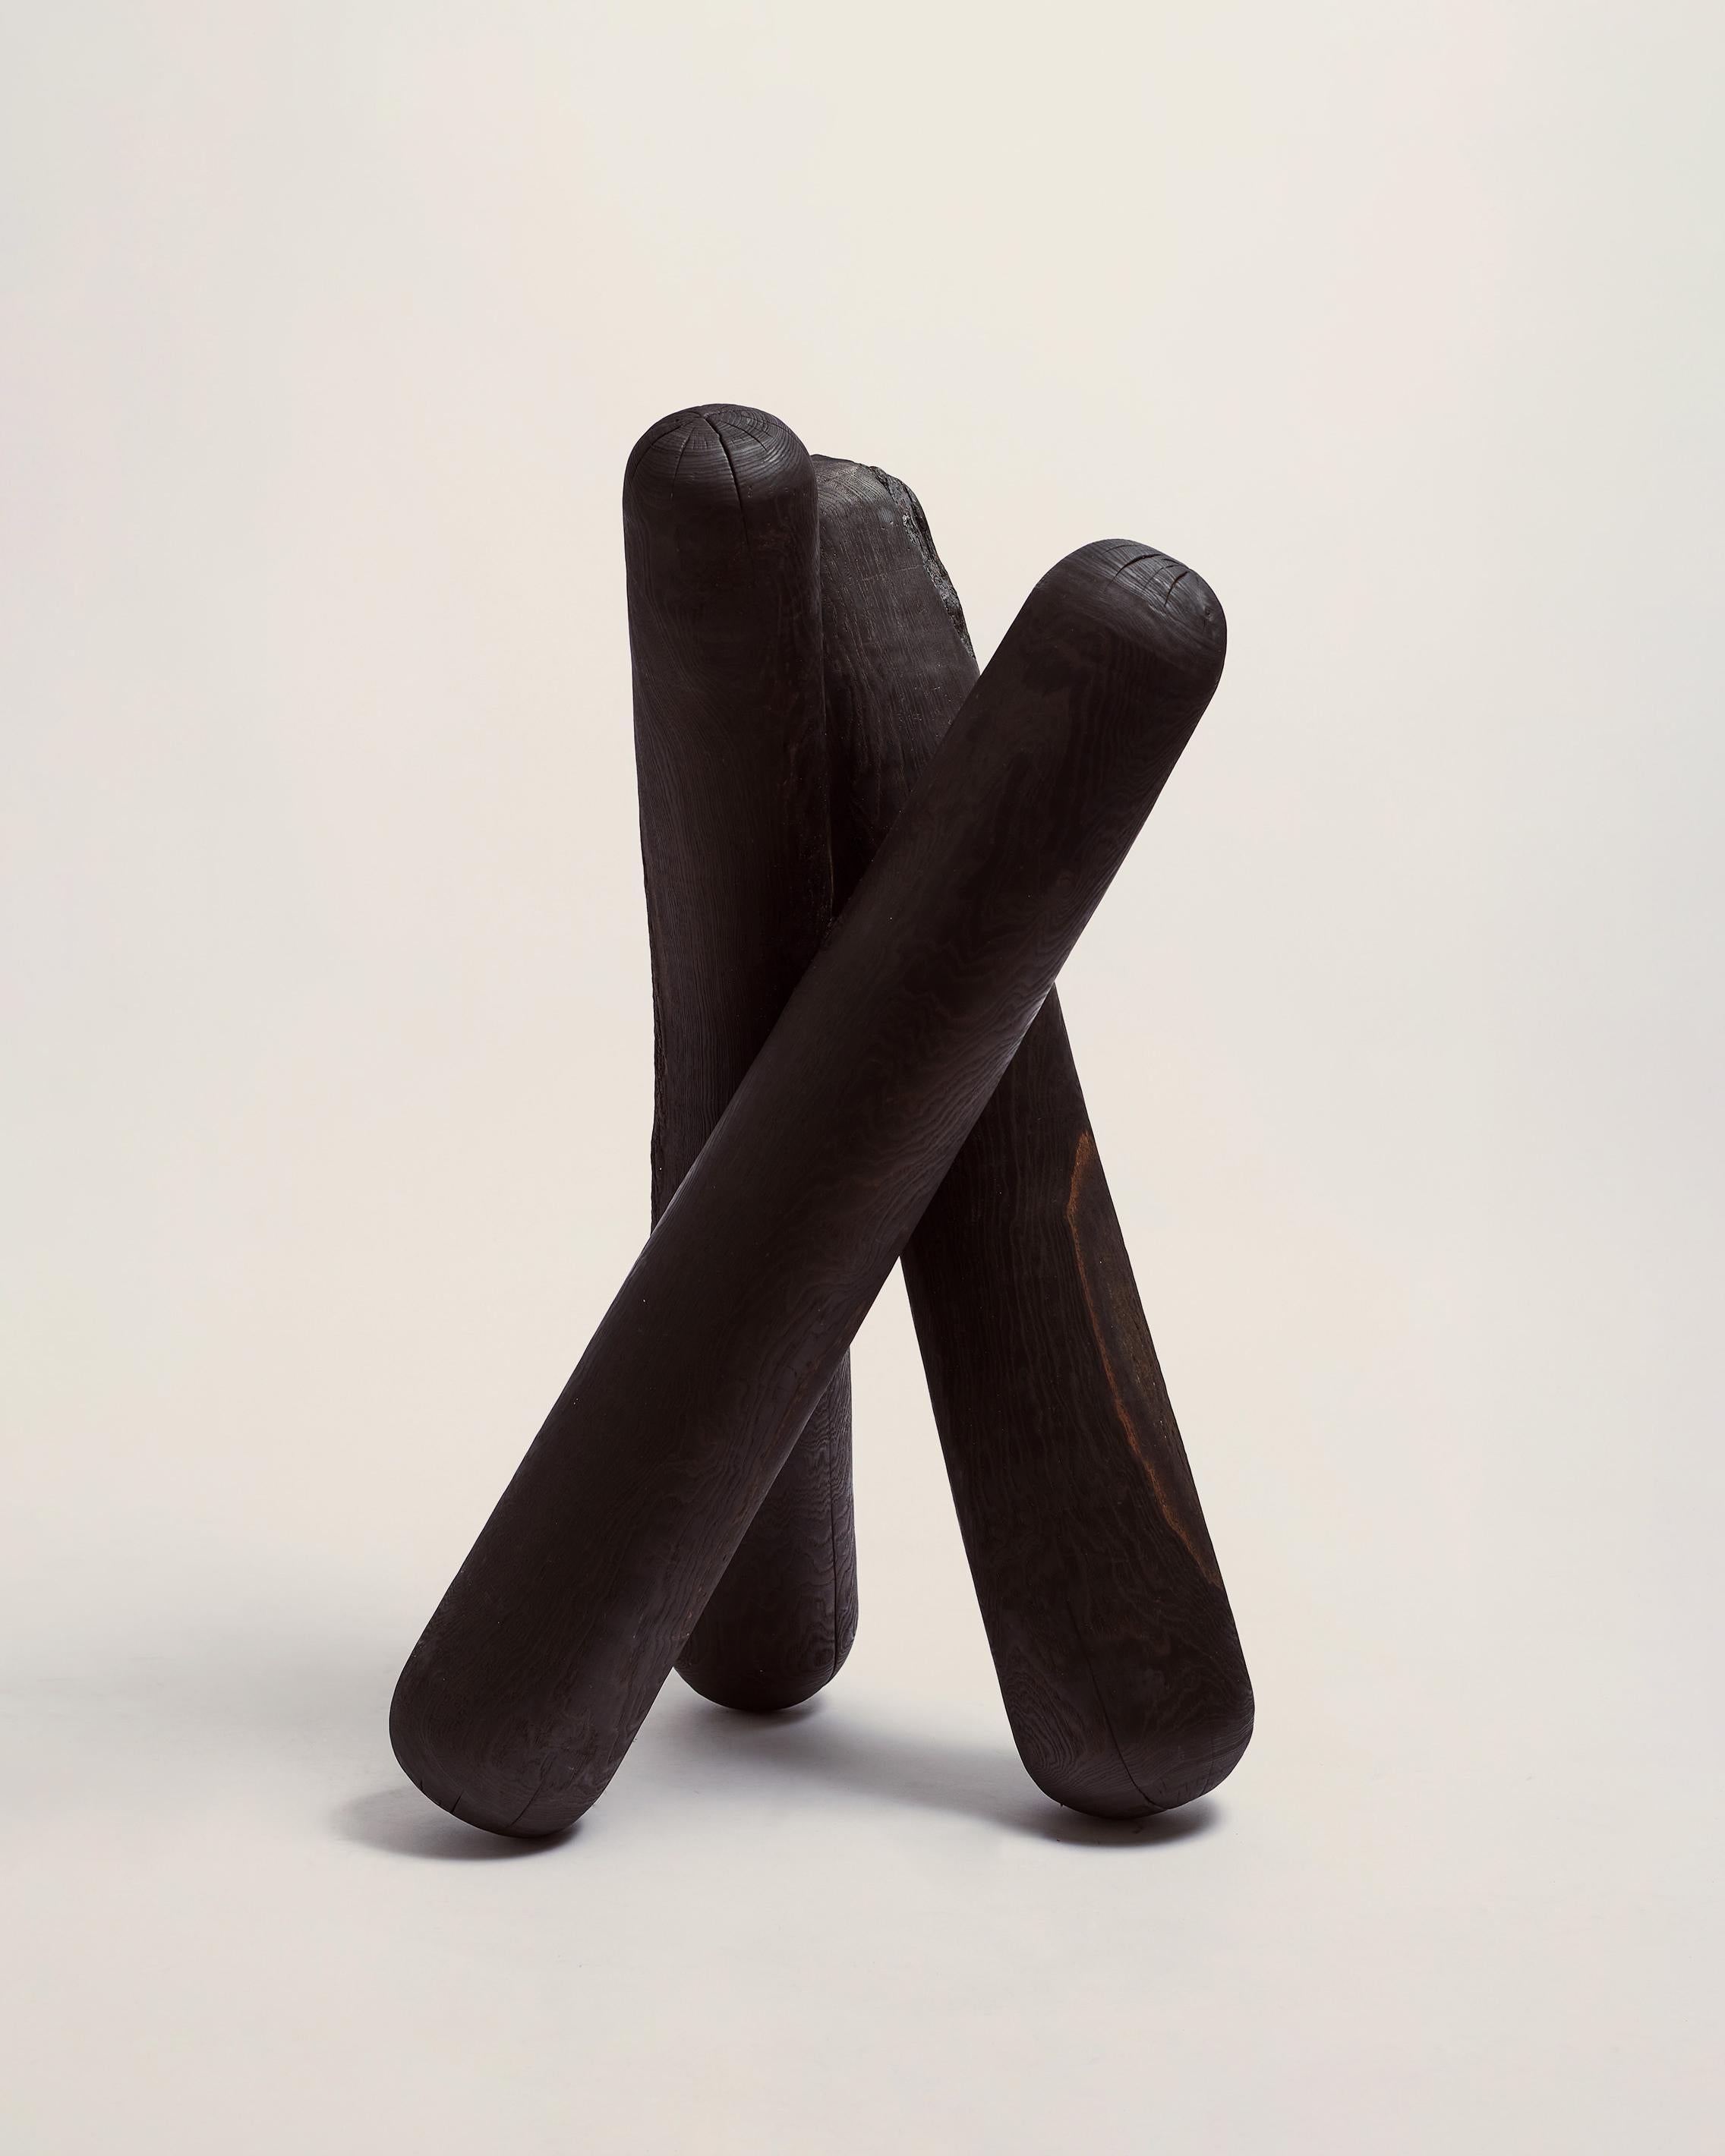 Hugo Mahieu Abstract Sculpture - Grande sculpture en bois brulé - geometric burned wood sculpture